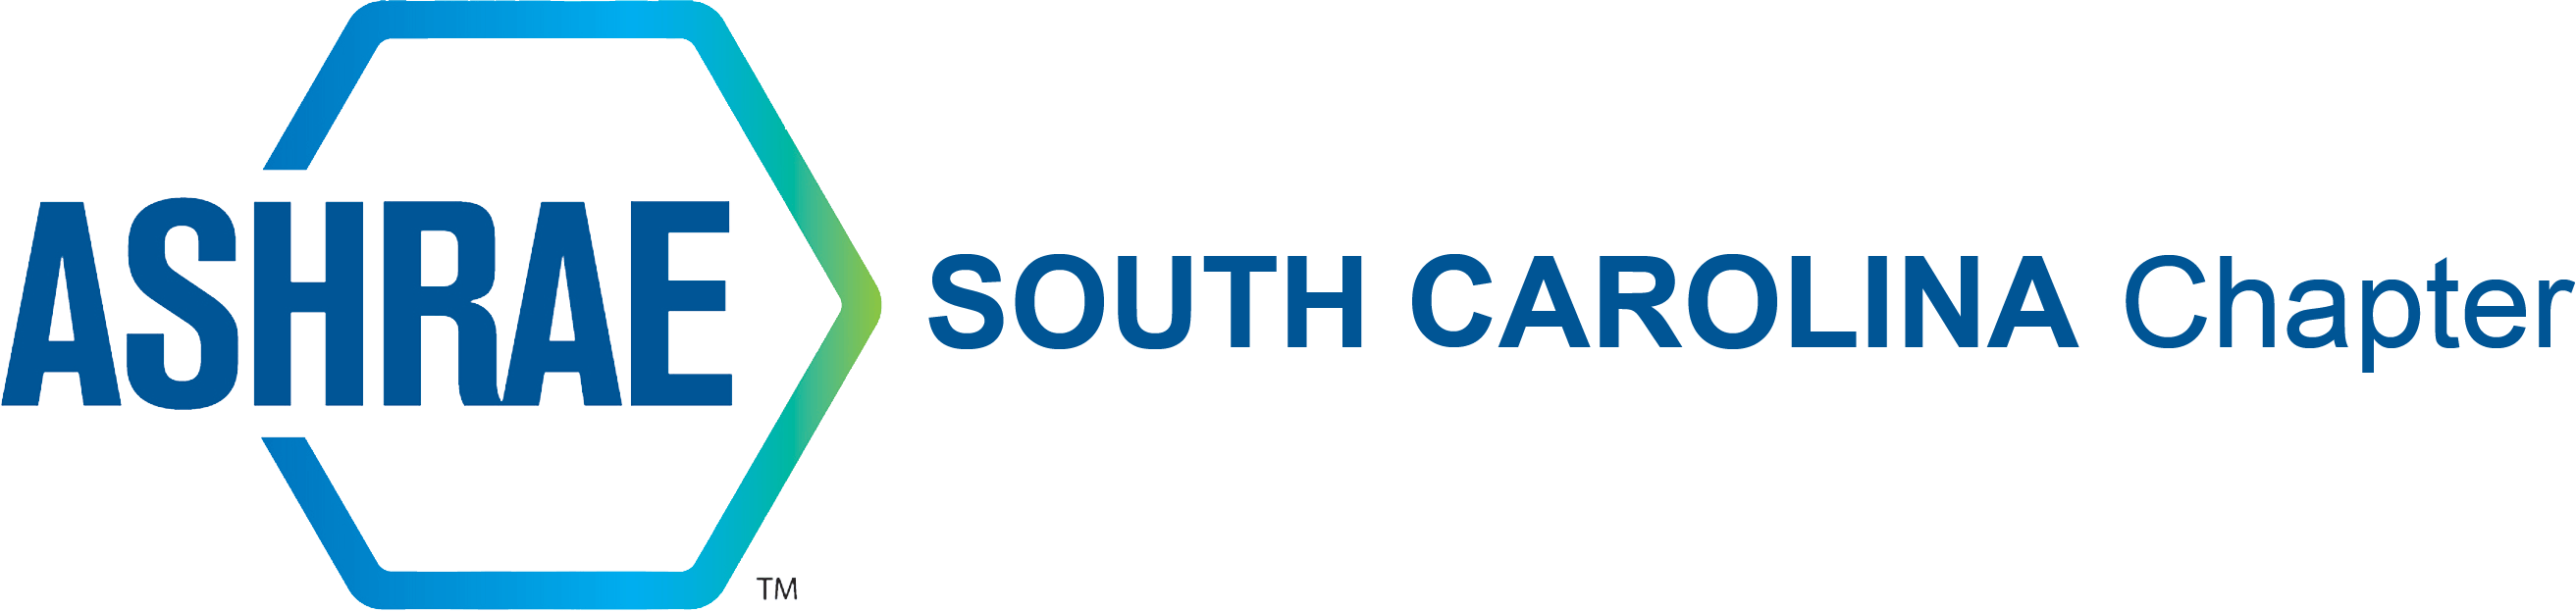 ASHRAE Logo - Sponsorship Opportunities South Carolina Chapter